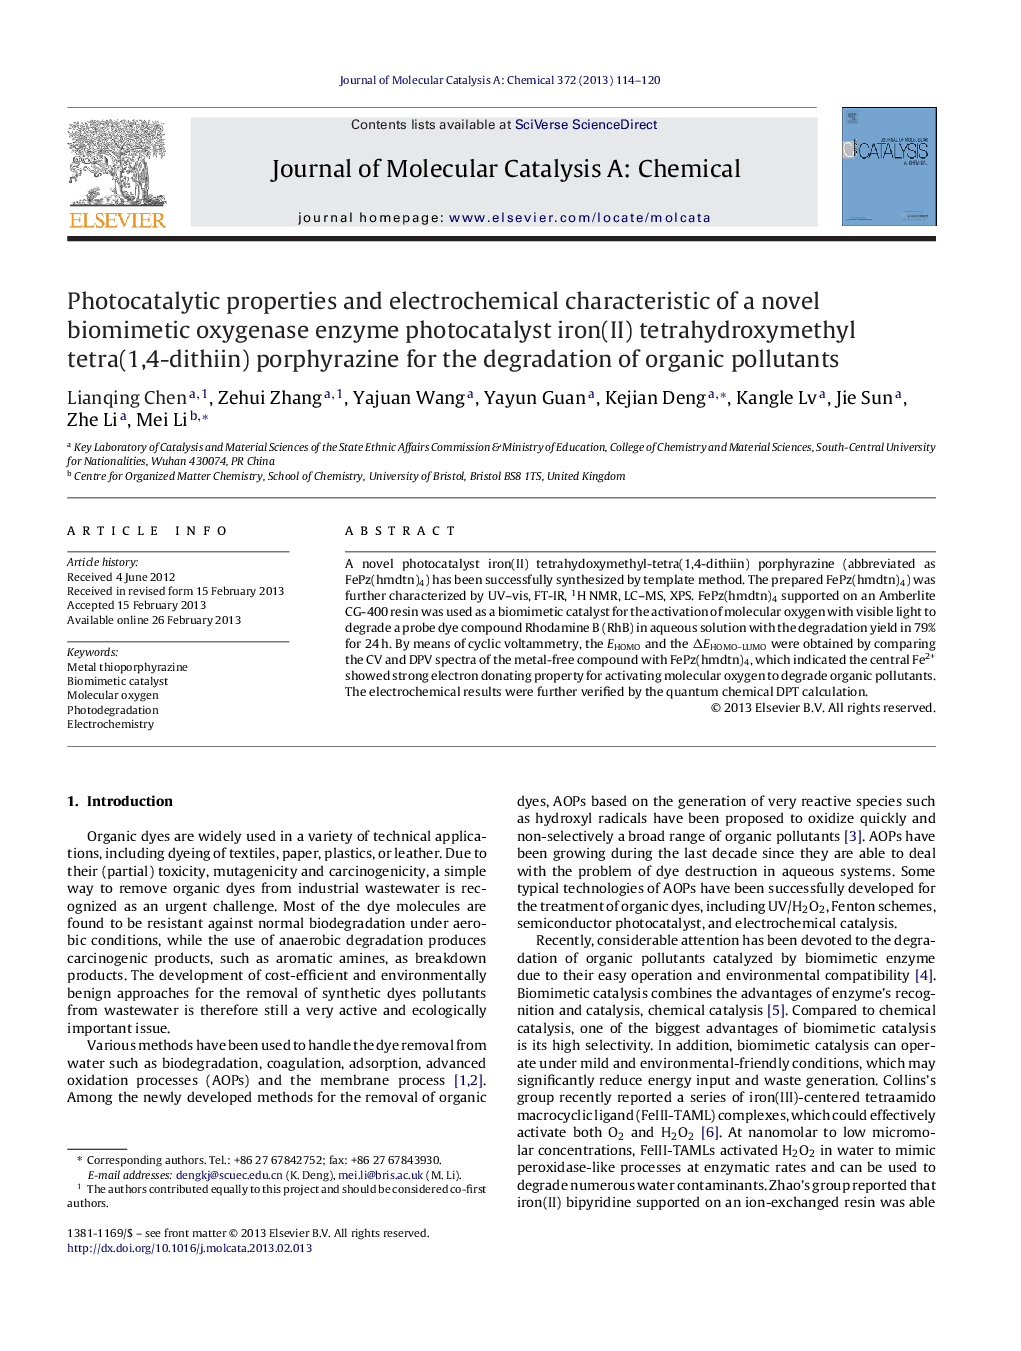 Photocatalytic properties and electrochemical characteristic of a novel biomimetic oxygenase enzyme photocatalyst iron(II) tetrahydroxymethyl tetra(1,4-dithiin) porphyrazine for the degradation of organic pollutants